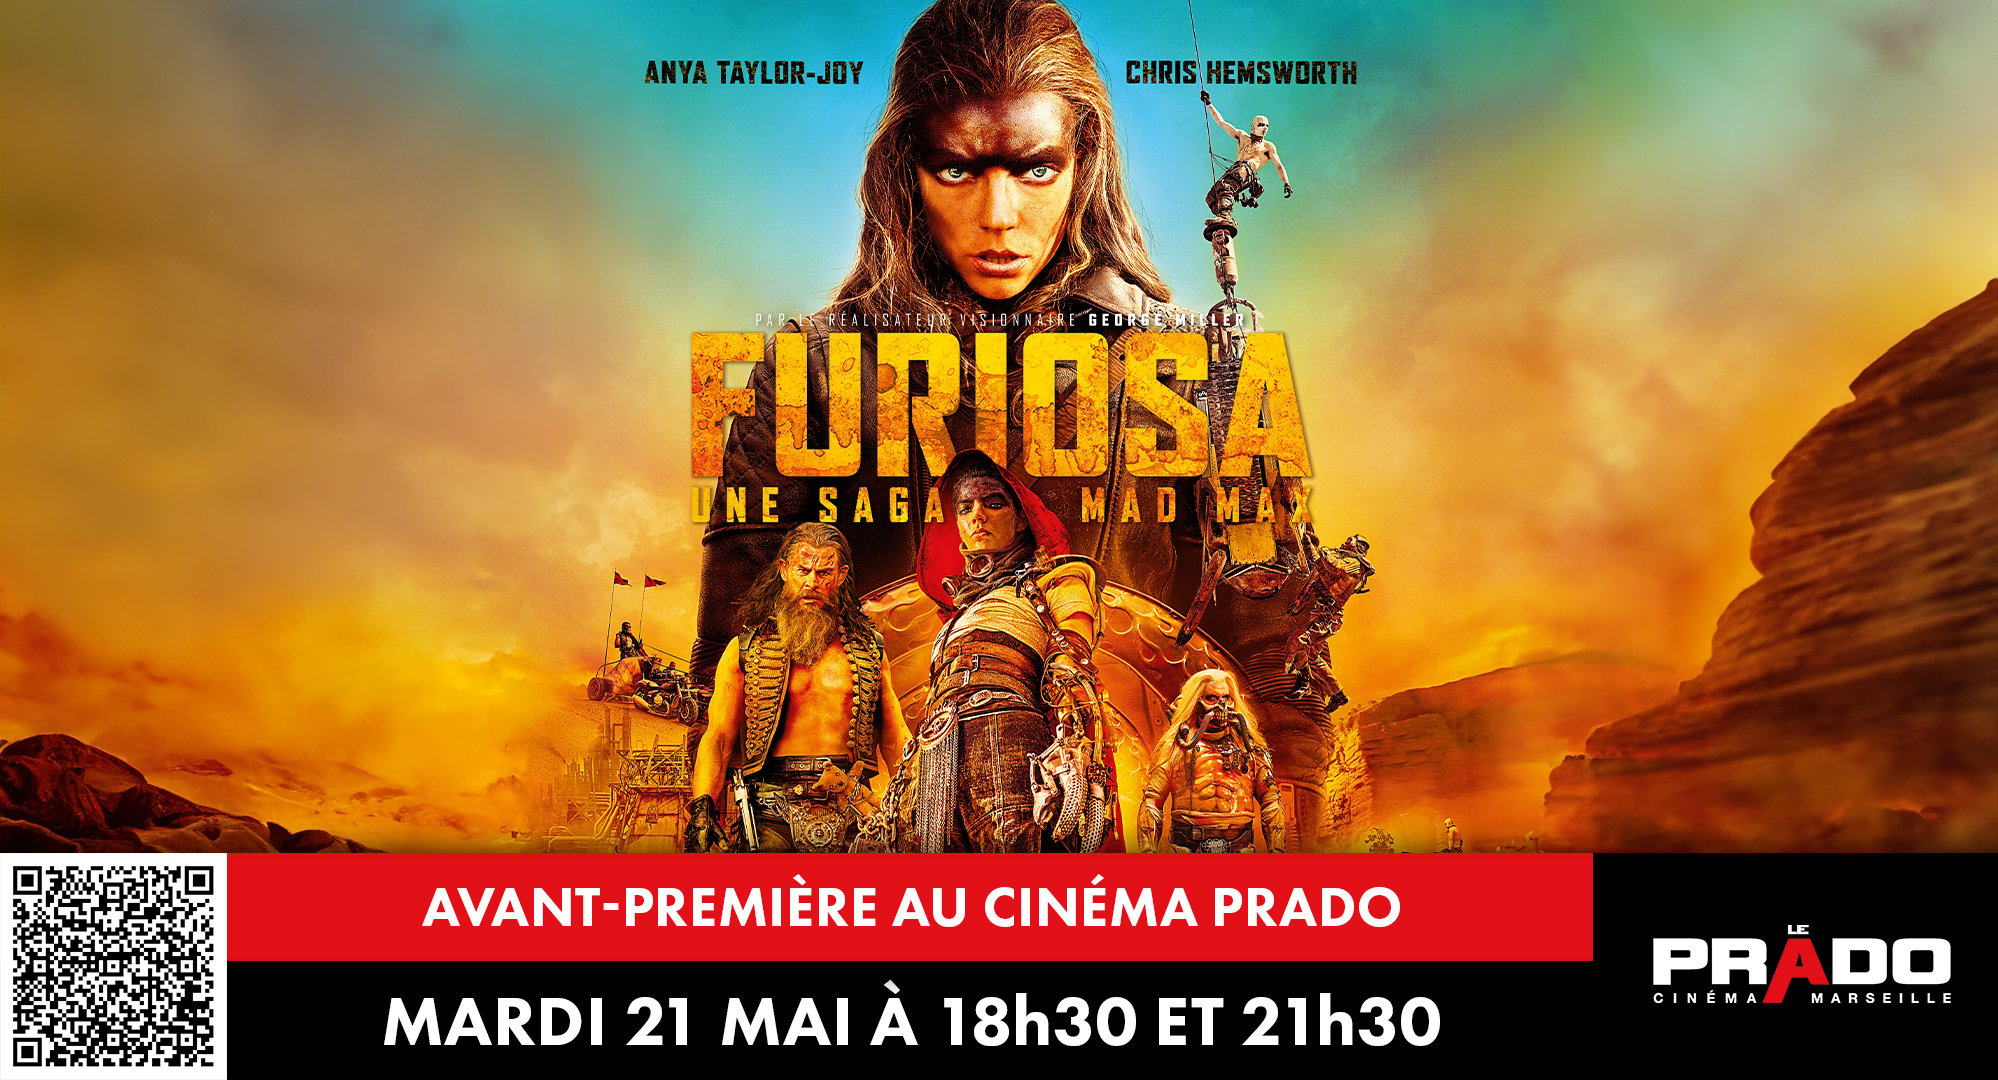 Avant-première du film "Furiosa : une saga Mad Max"